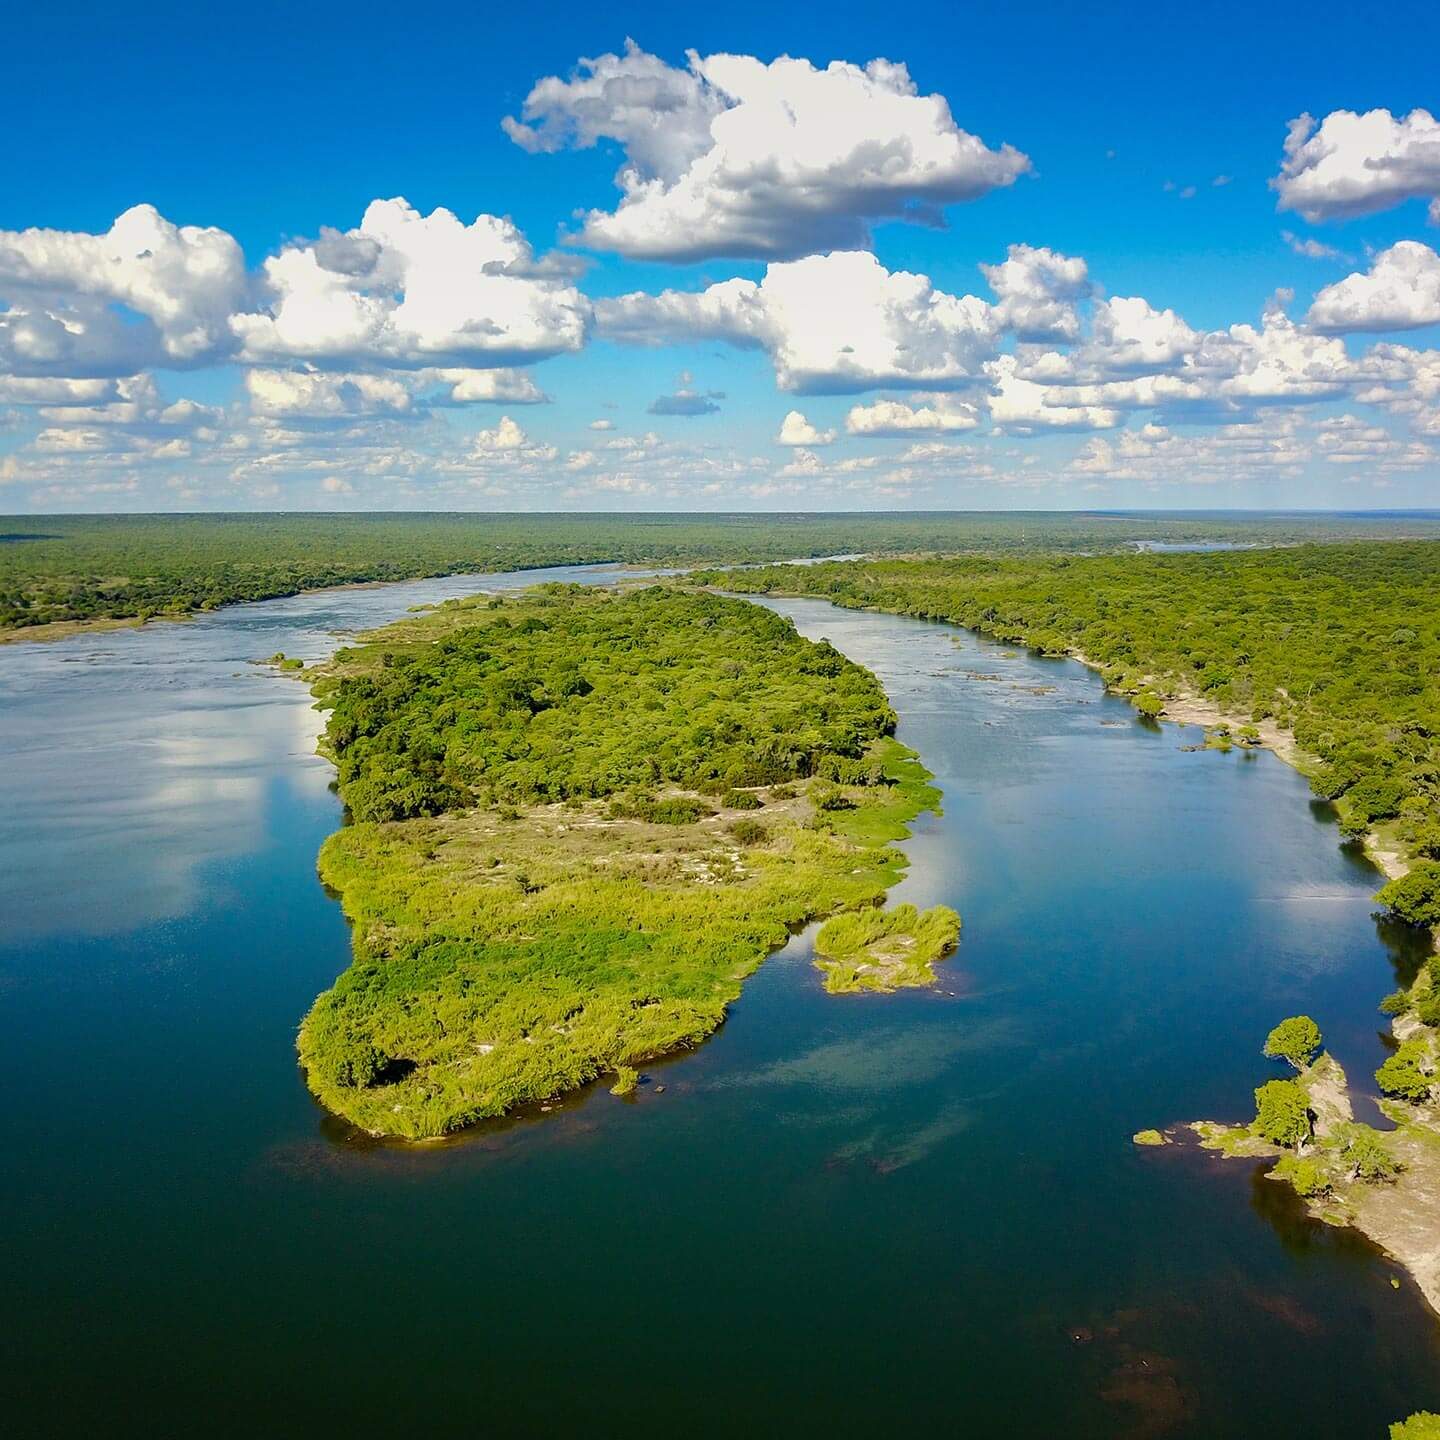 Areial shot of the Isibindi Africa Lodge Tsowa Safari Island, found in the middle of the Zambezi River near Victoria Falls.